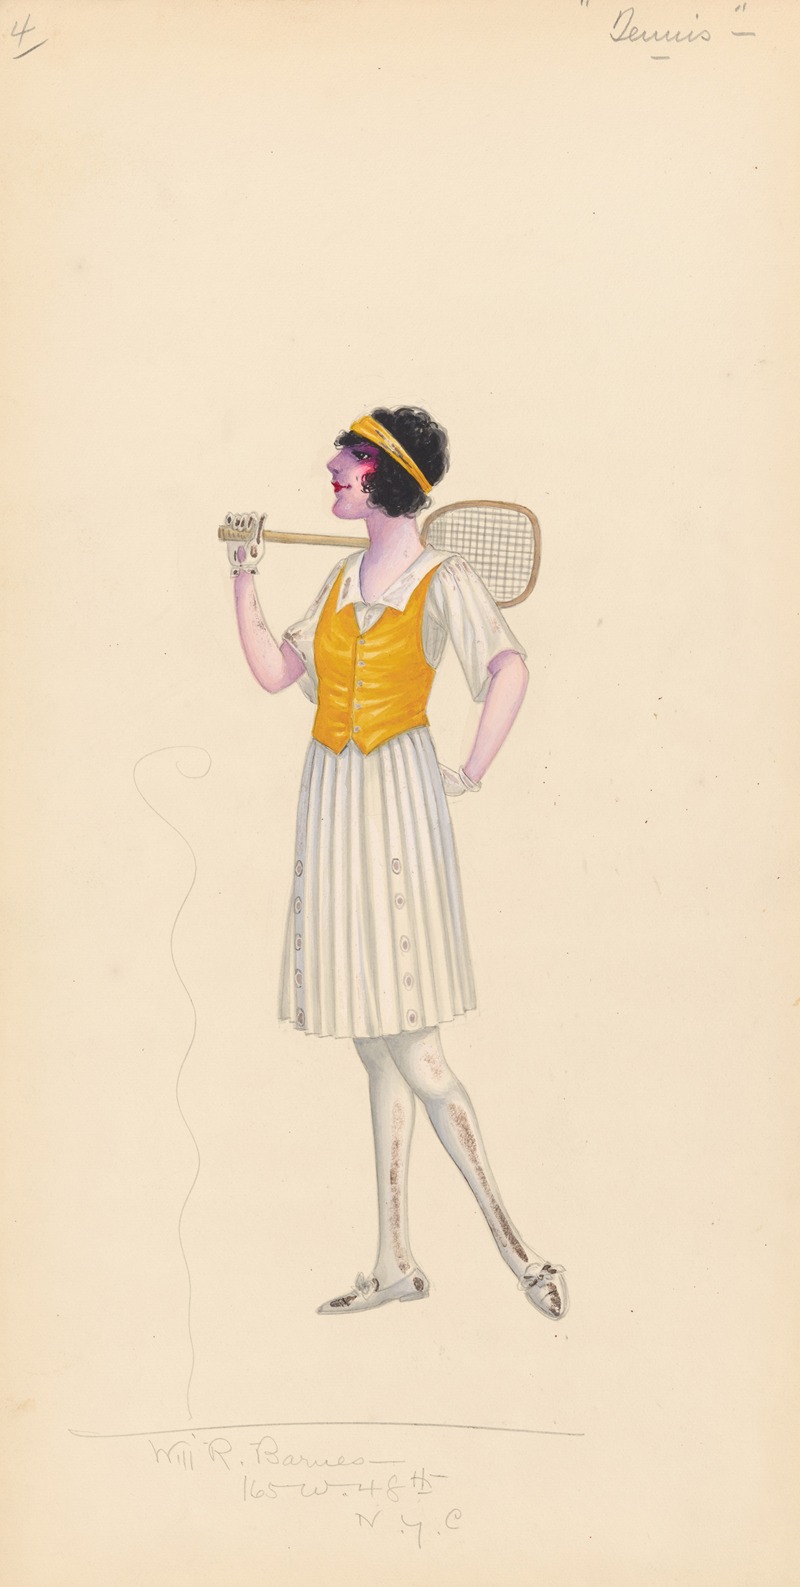 Will R. Barnes - Tennis, 4